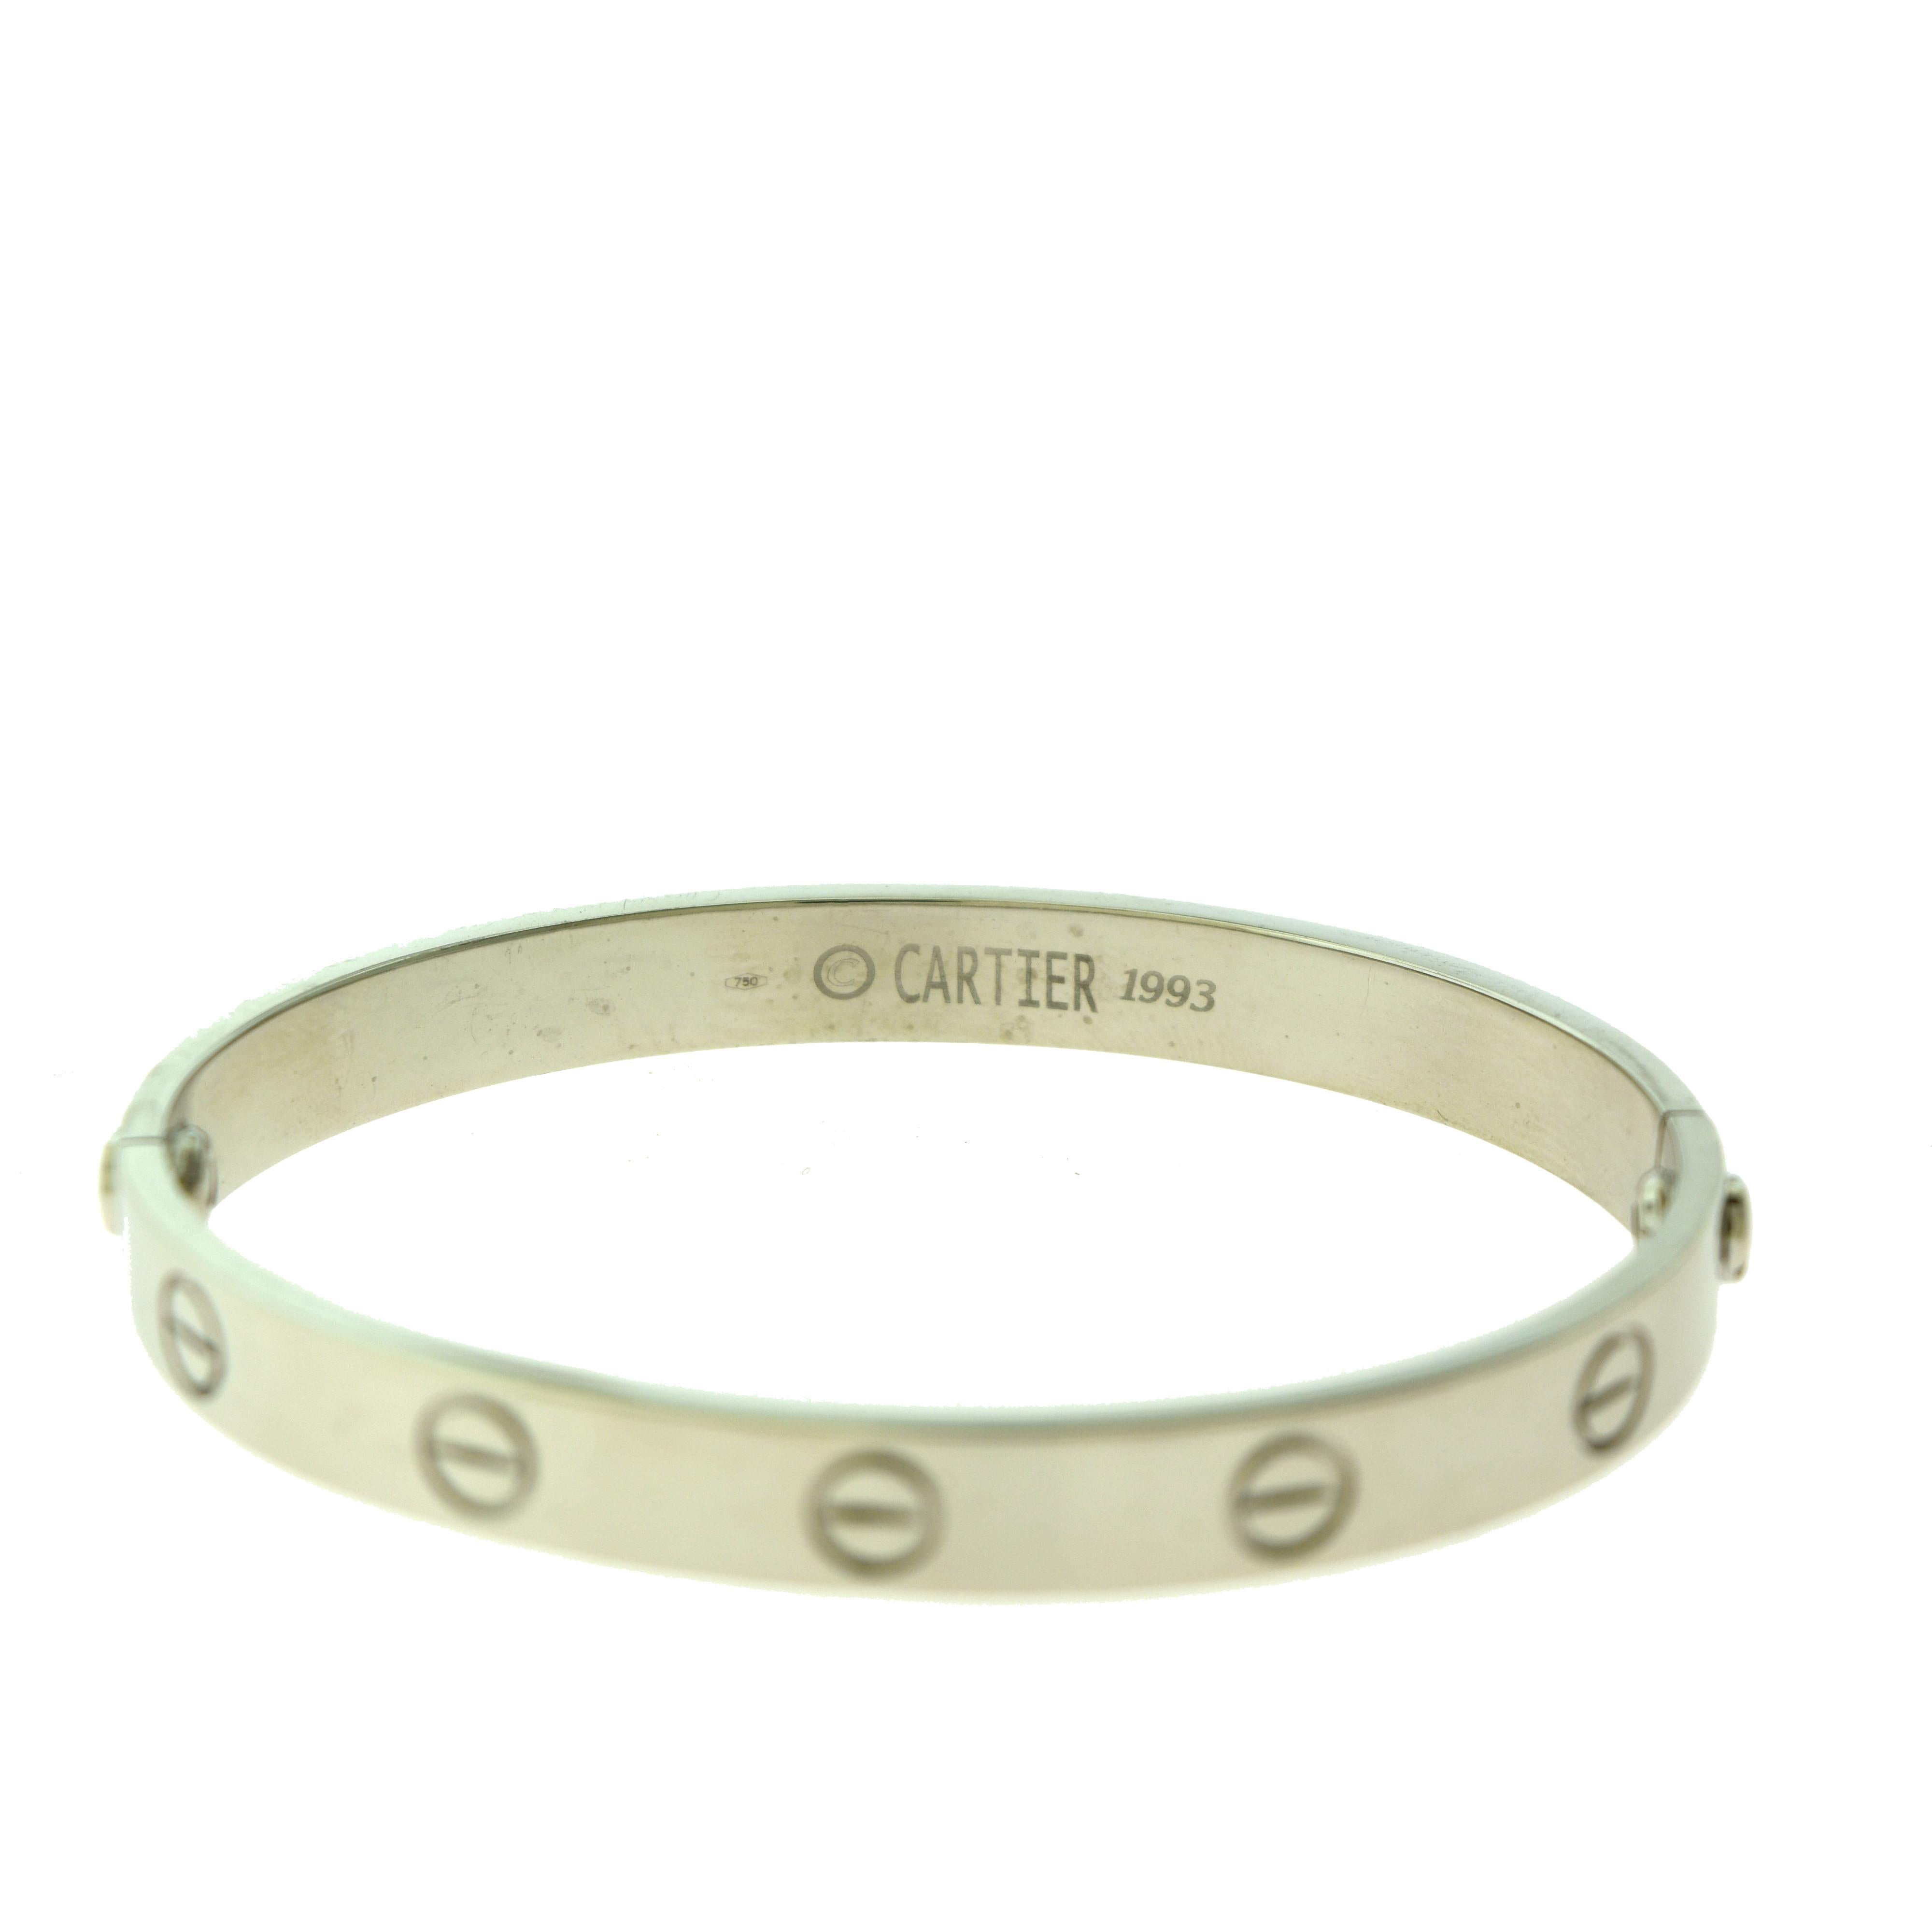 Designer: Cartier

Collection: Love

Style: Bangle Bracelet

Metal: White Gold

Metal Purity: 18k

Bracelet Size: 16 = 16 cm

Hallmarks: 16, Au750 Cartier, Serial No.,

Screw System: 